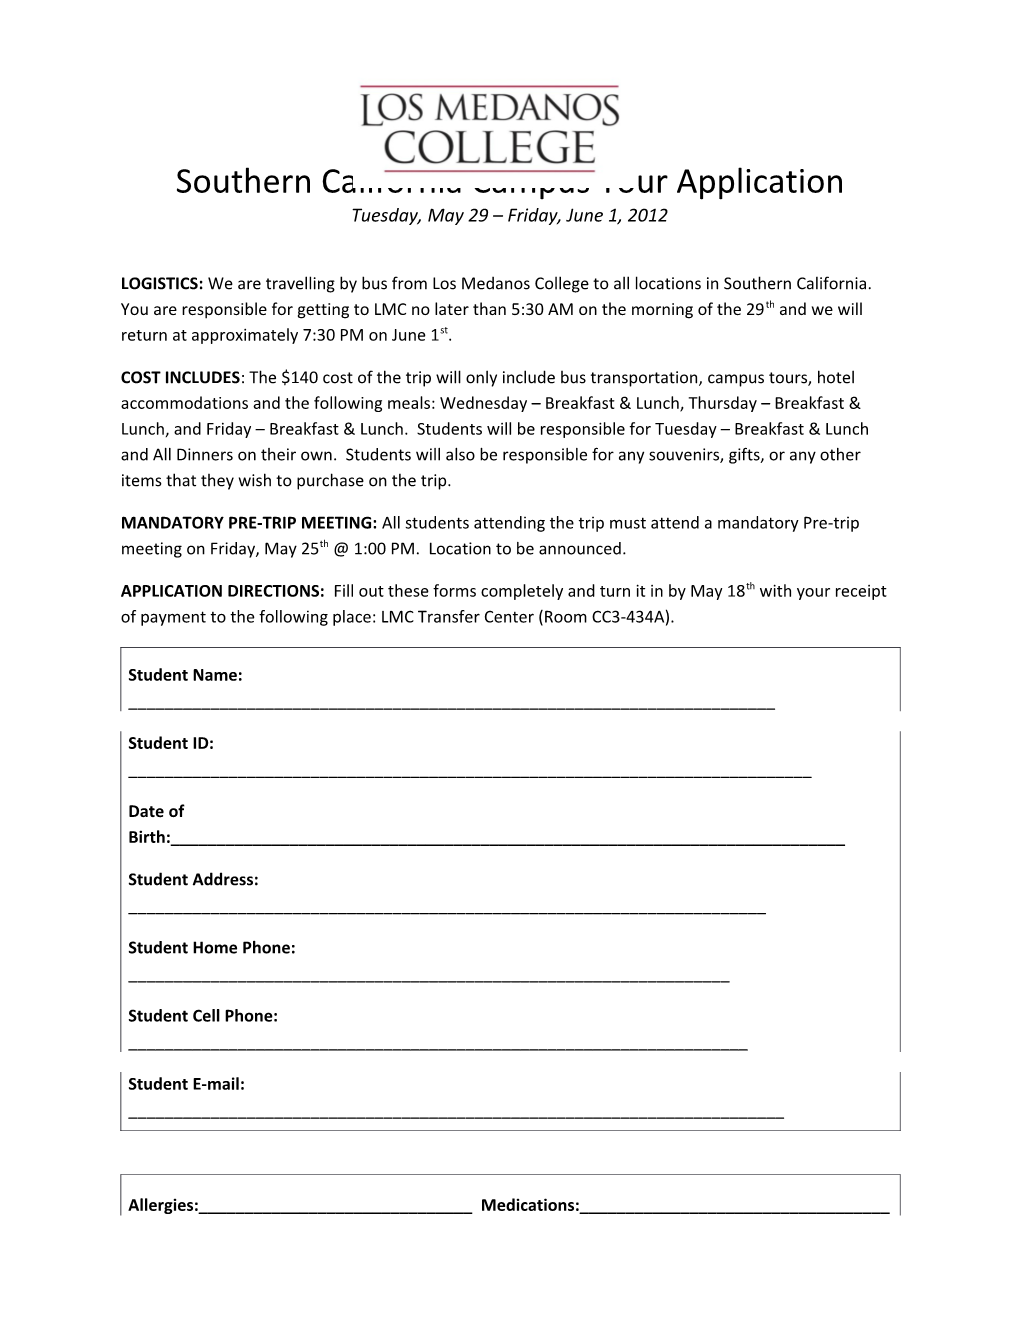 Southern California Campus Tour Application